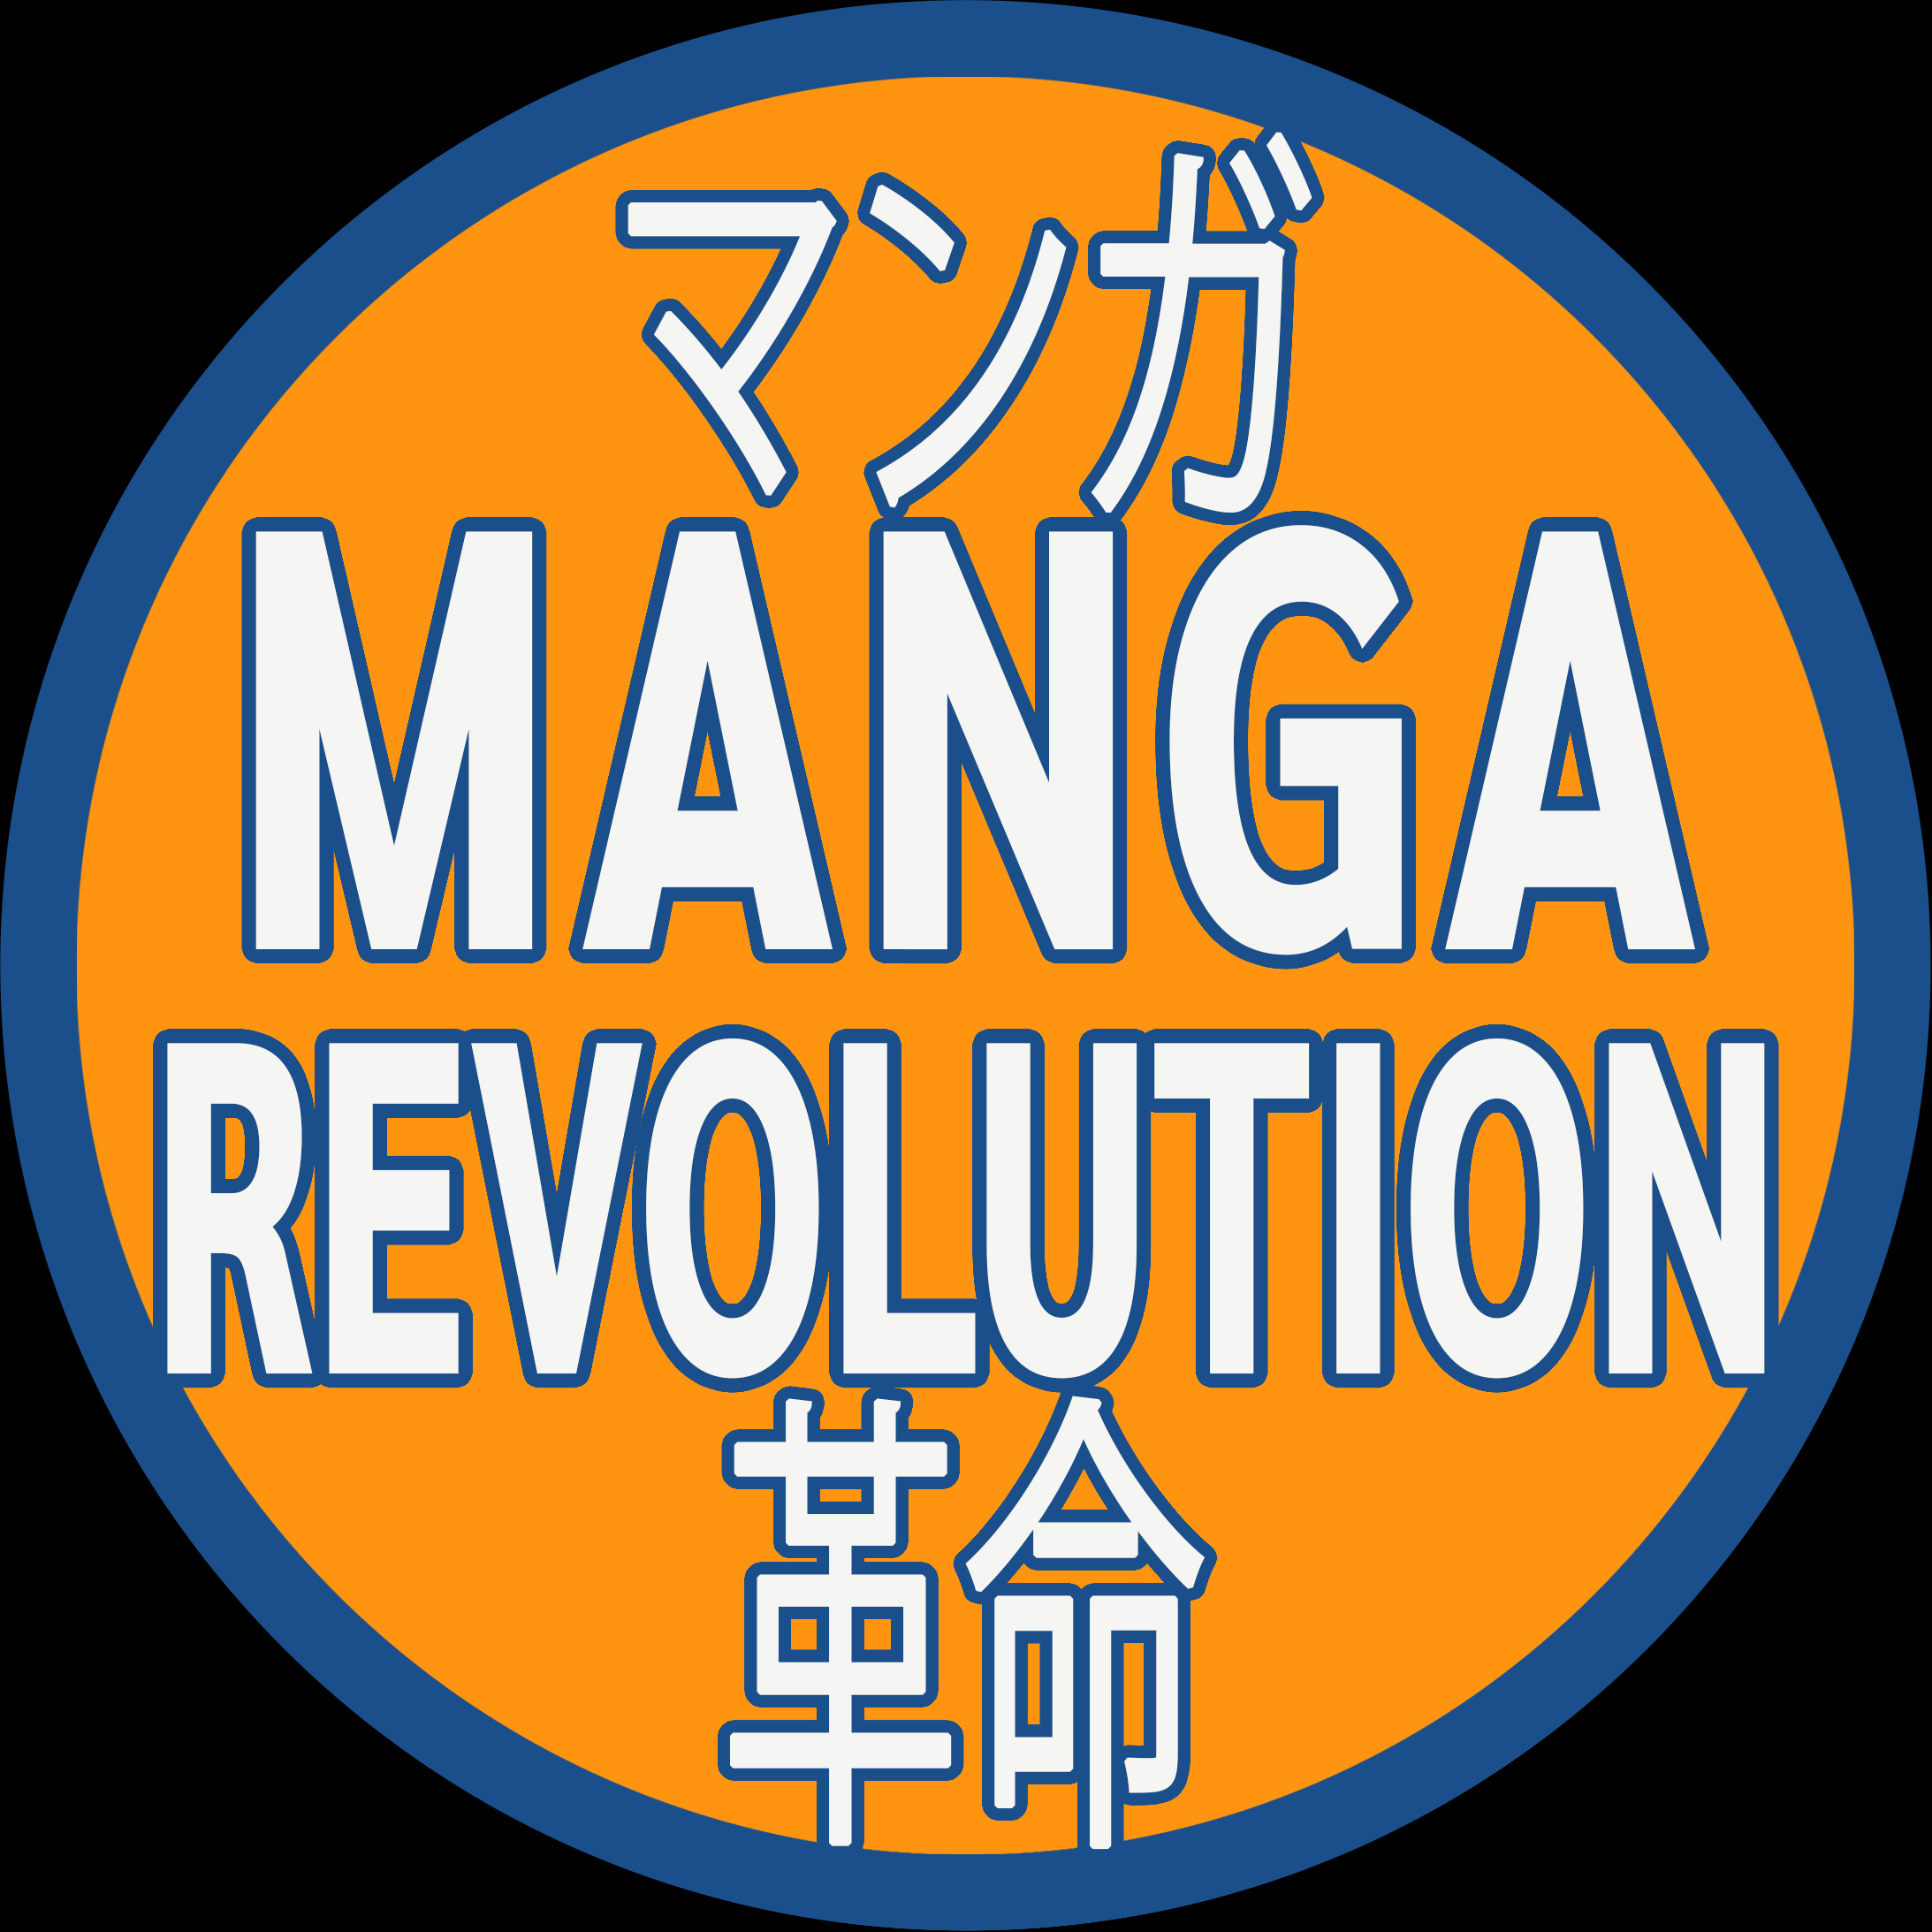 Naruto: Sasuke’s Story - The Uchiha and the Heavenly Stardust Review - Manga Revolution Podcast Episode 39